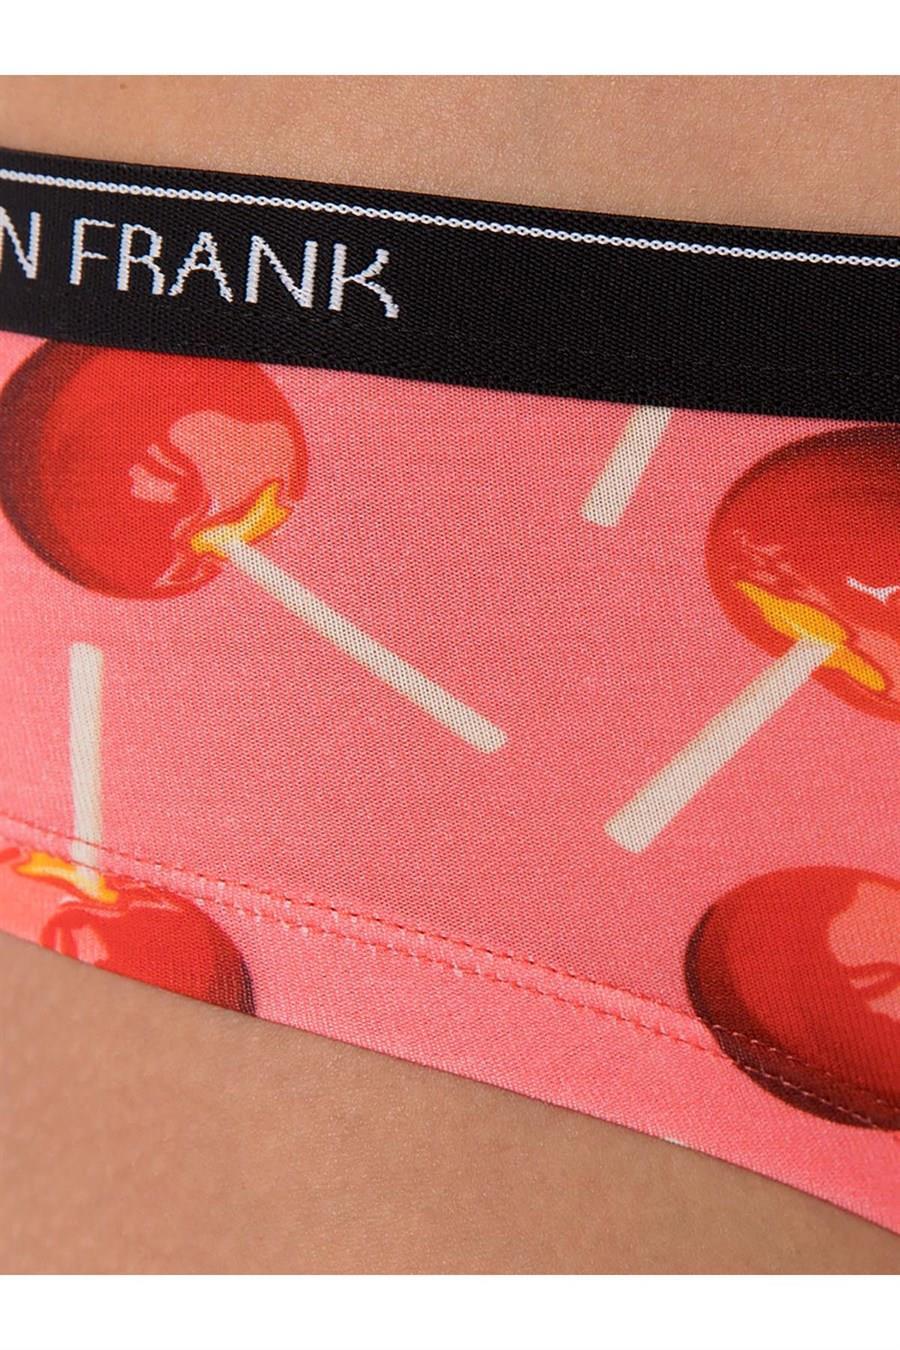 John Frank Identity Womens Hipster-Apple Candy - STREET MODE ™